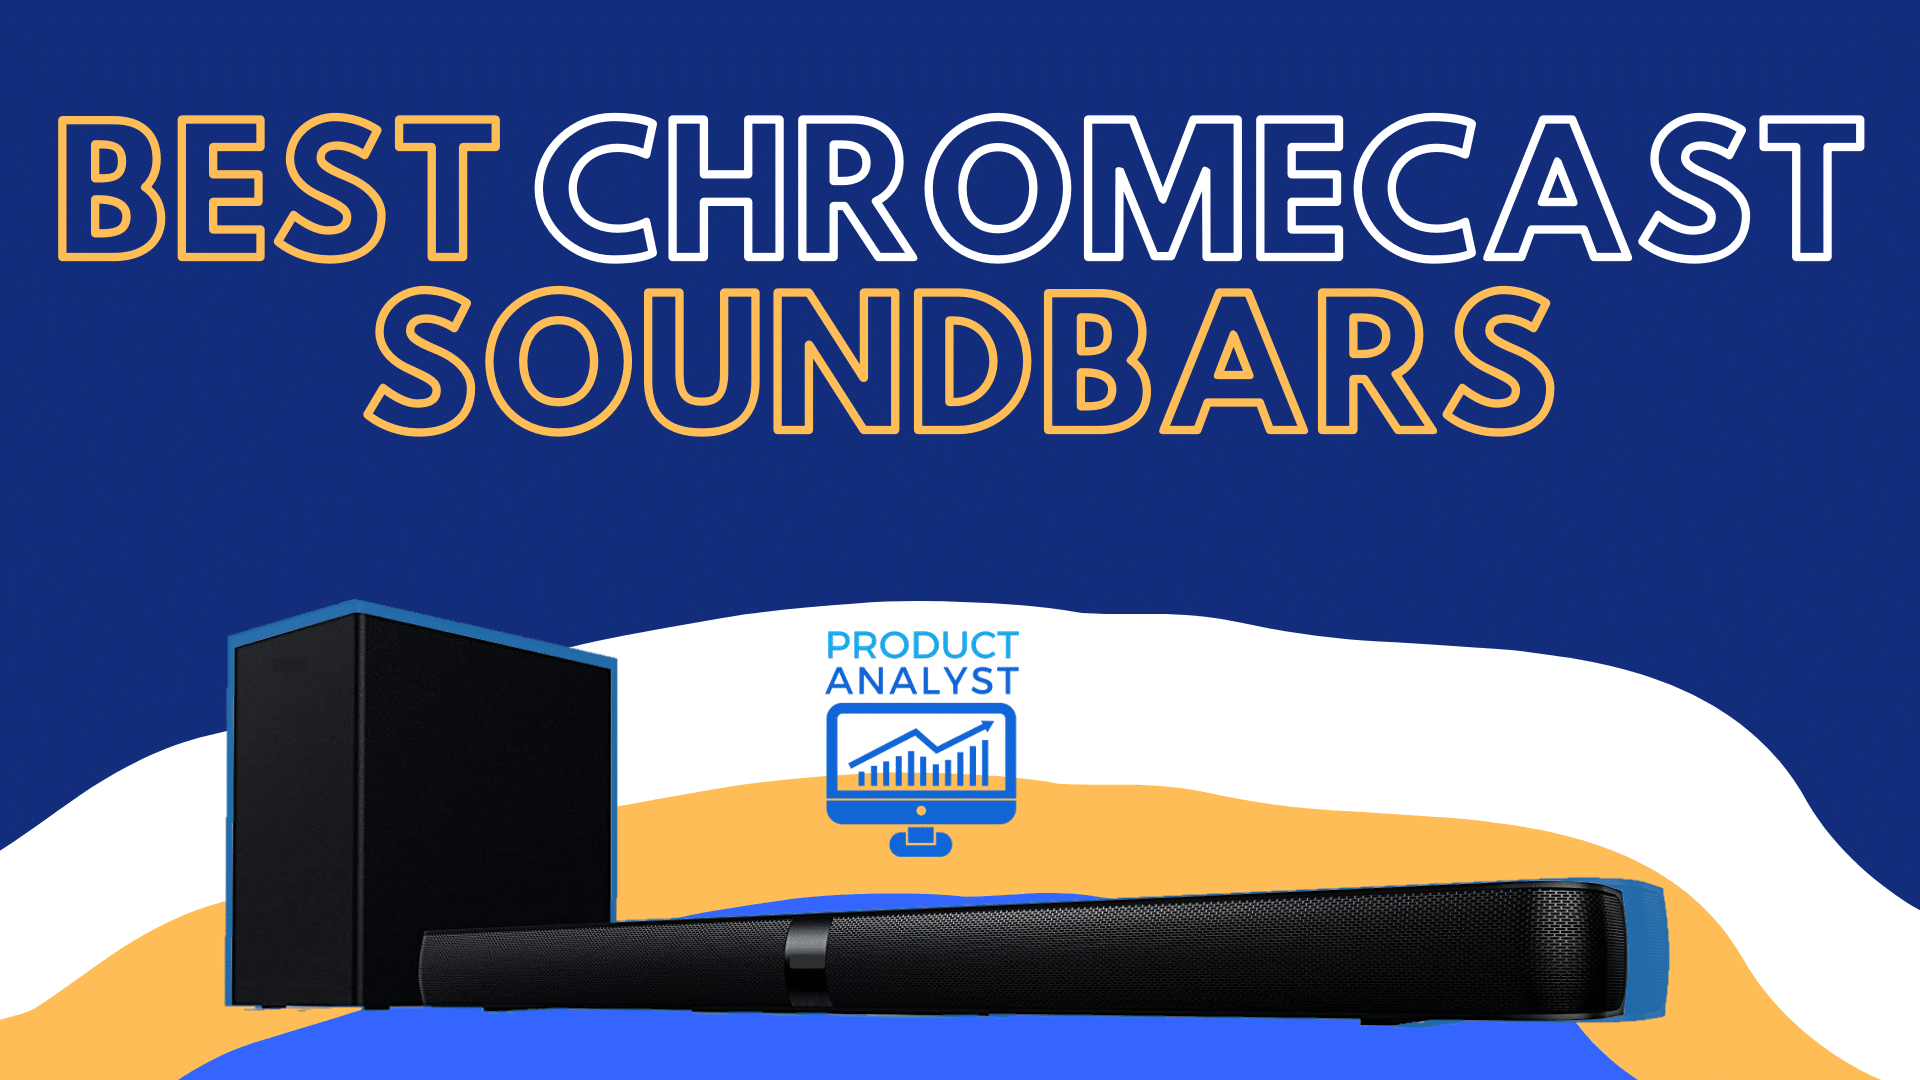 chromecast audio soundbar